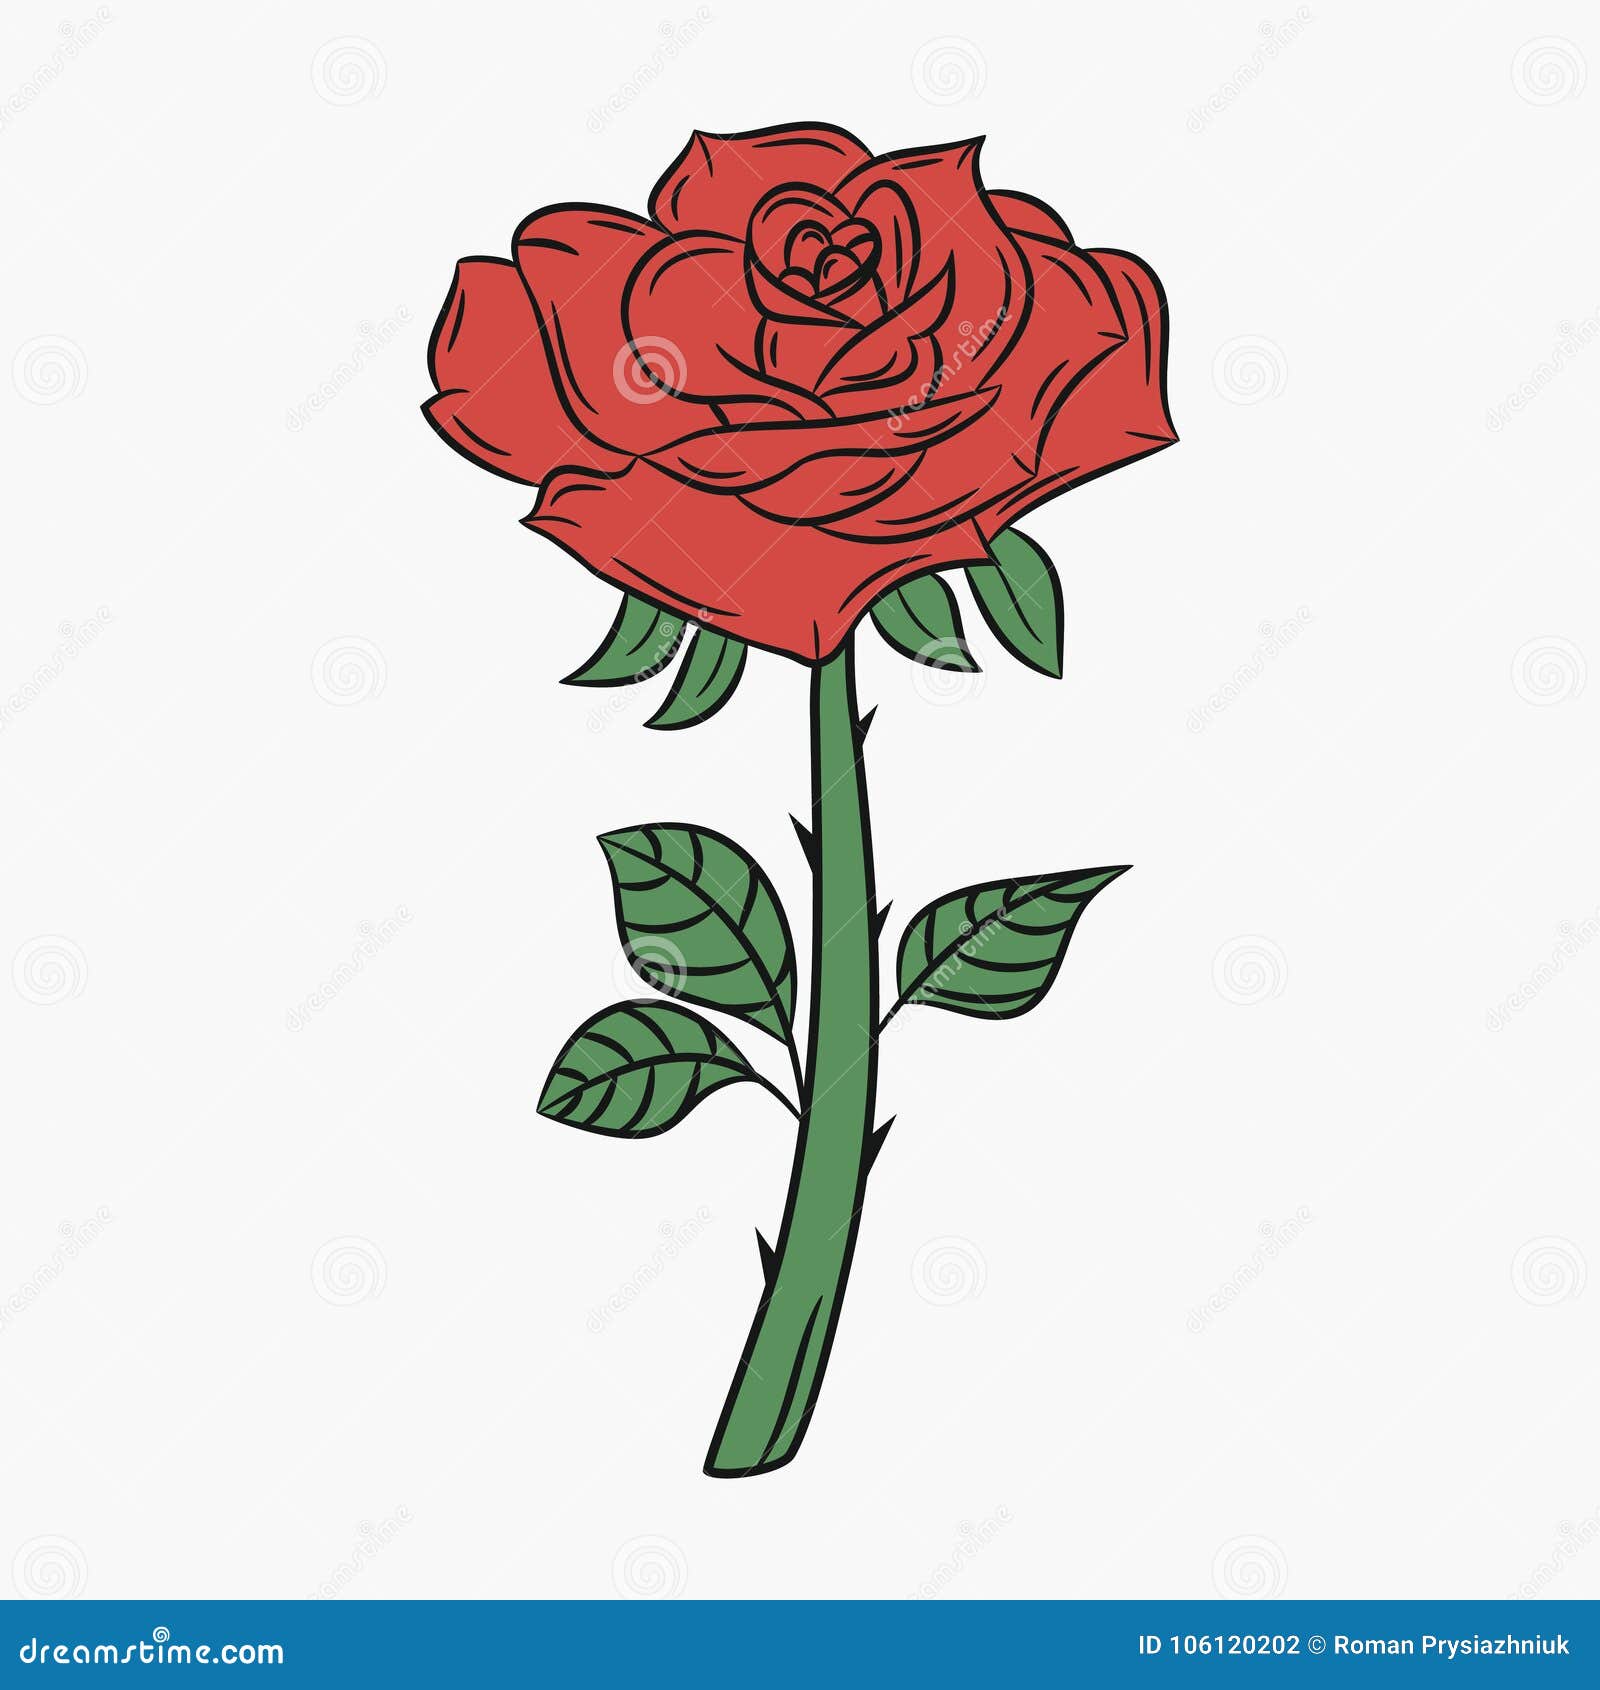 12,800+ Rose Bush Illustrations, Royalty-Free Vector Graphics & Clip Art -  iStock | Red rose bush, Rose bush isolated, Pink rose bush